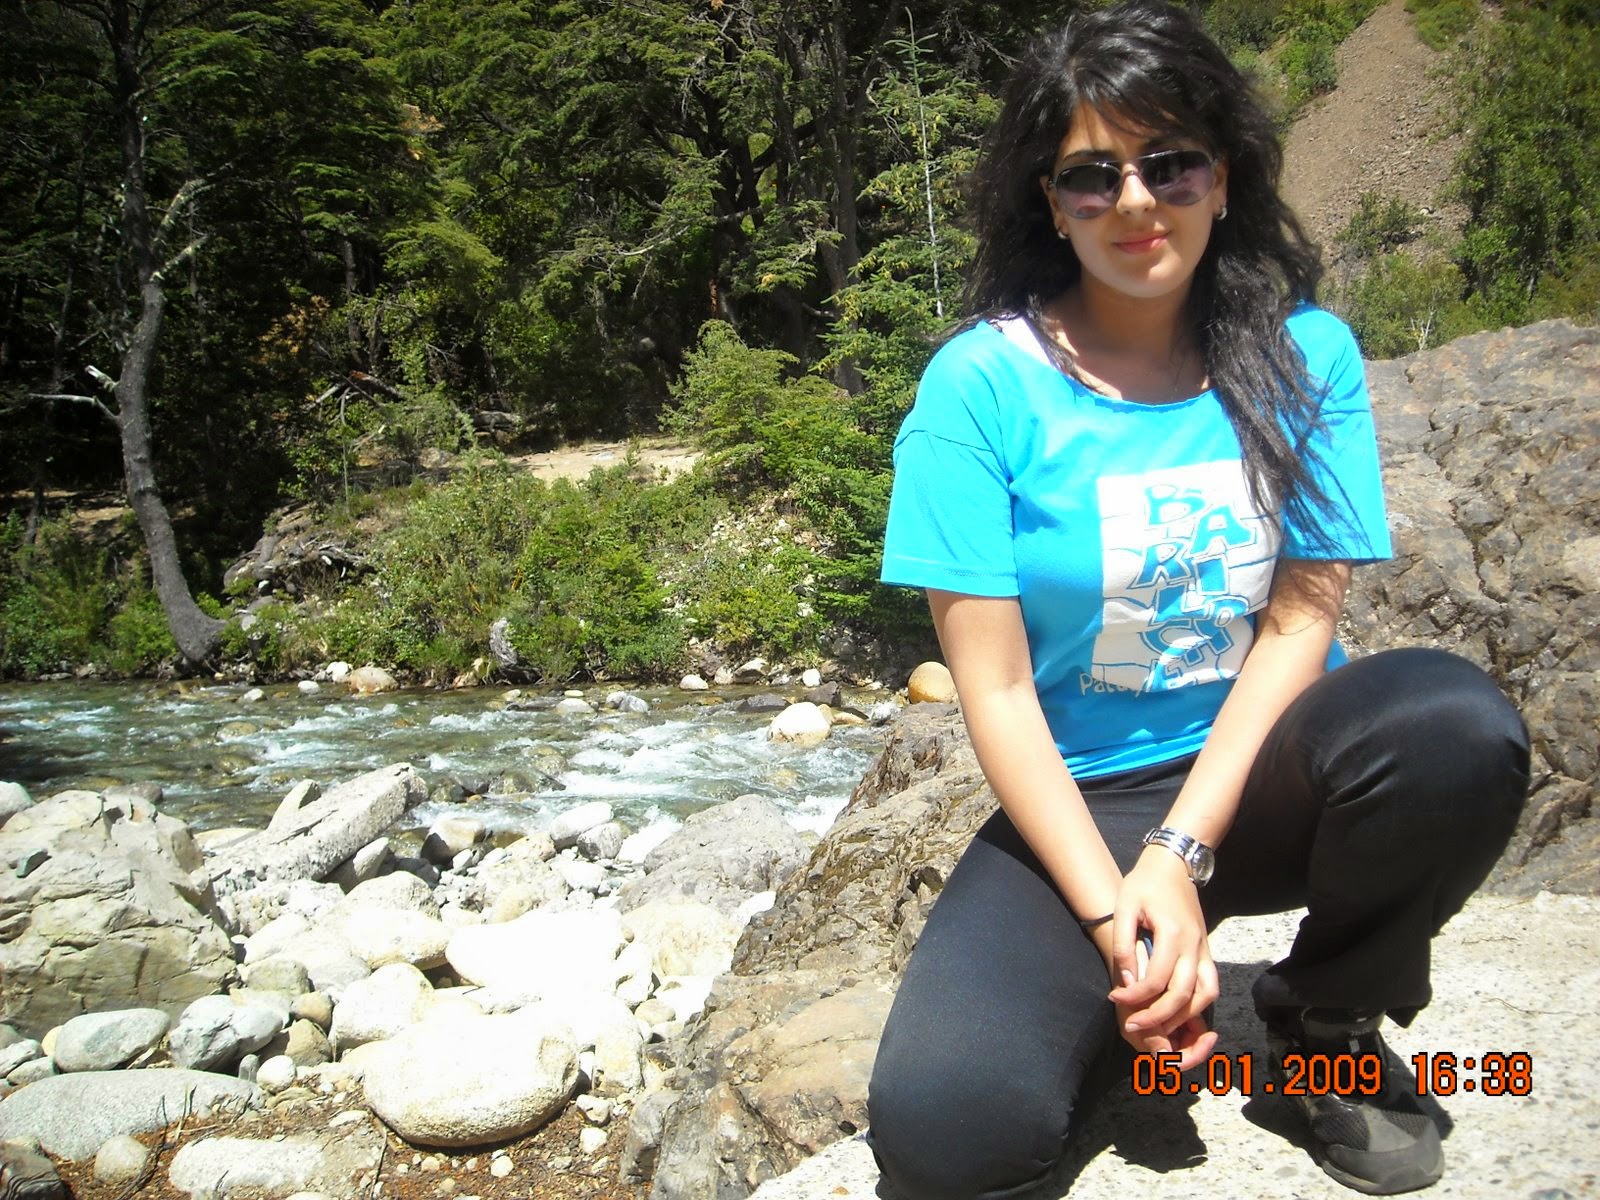 Desi Indian Girls On Himachal Pradesh Tourist Trip Hd Photos Beautiful Desi Sexy Girls Hot